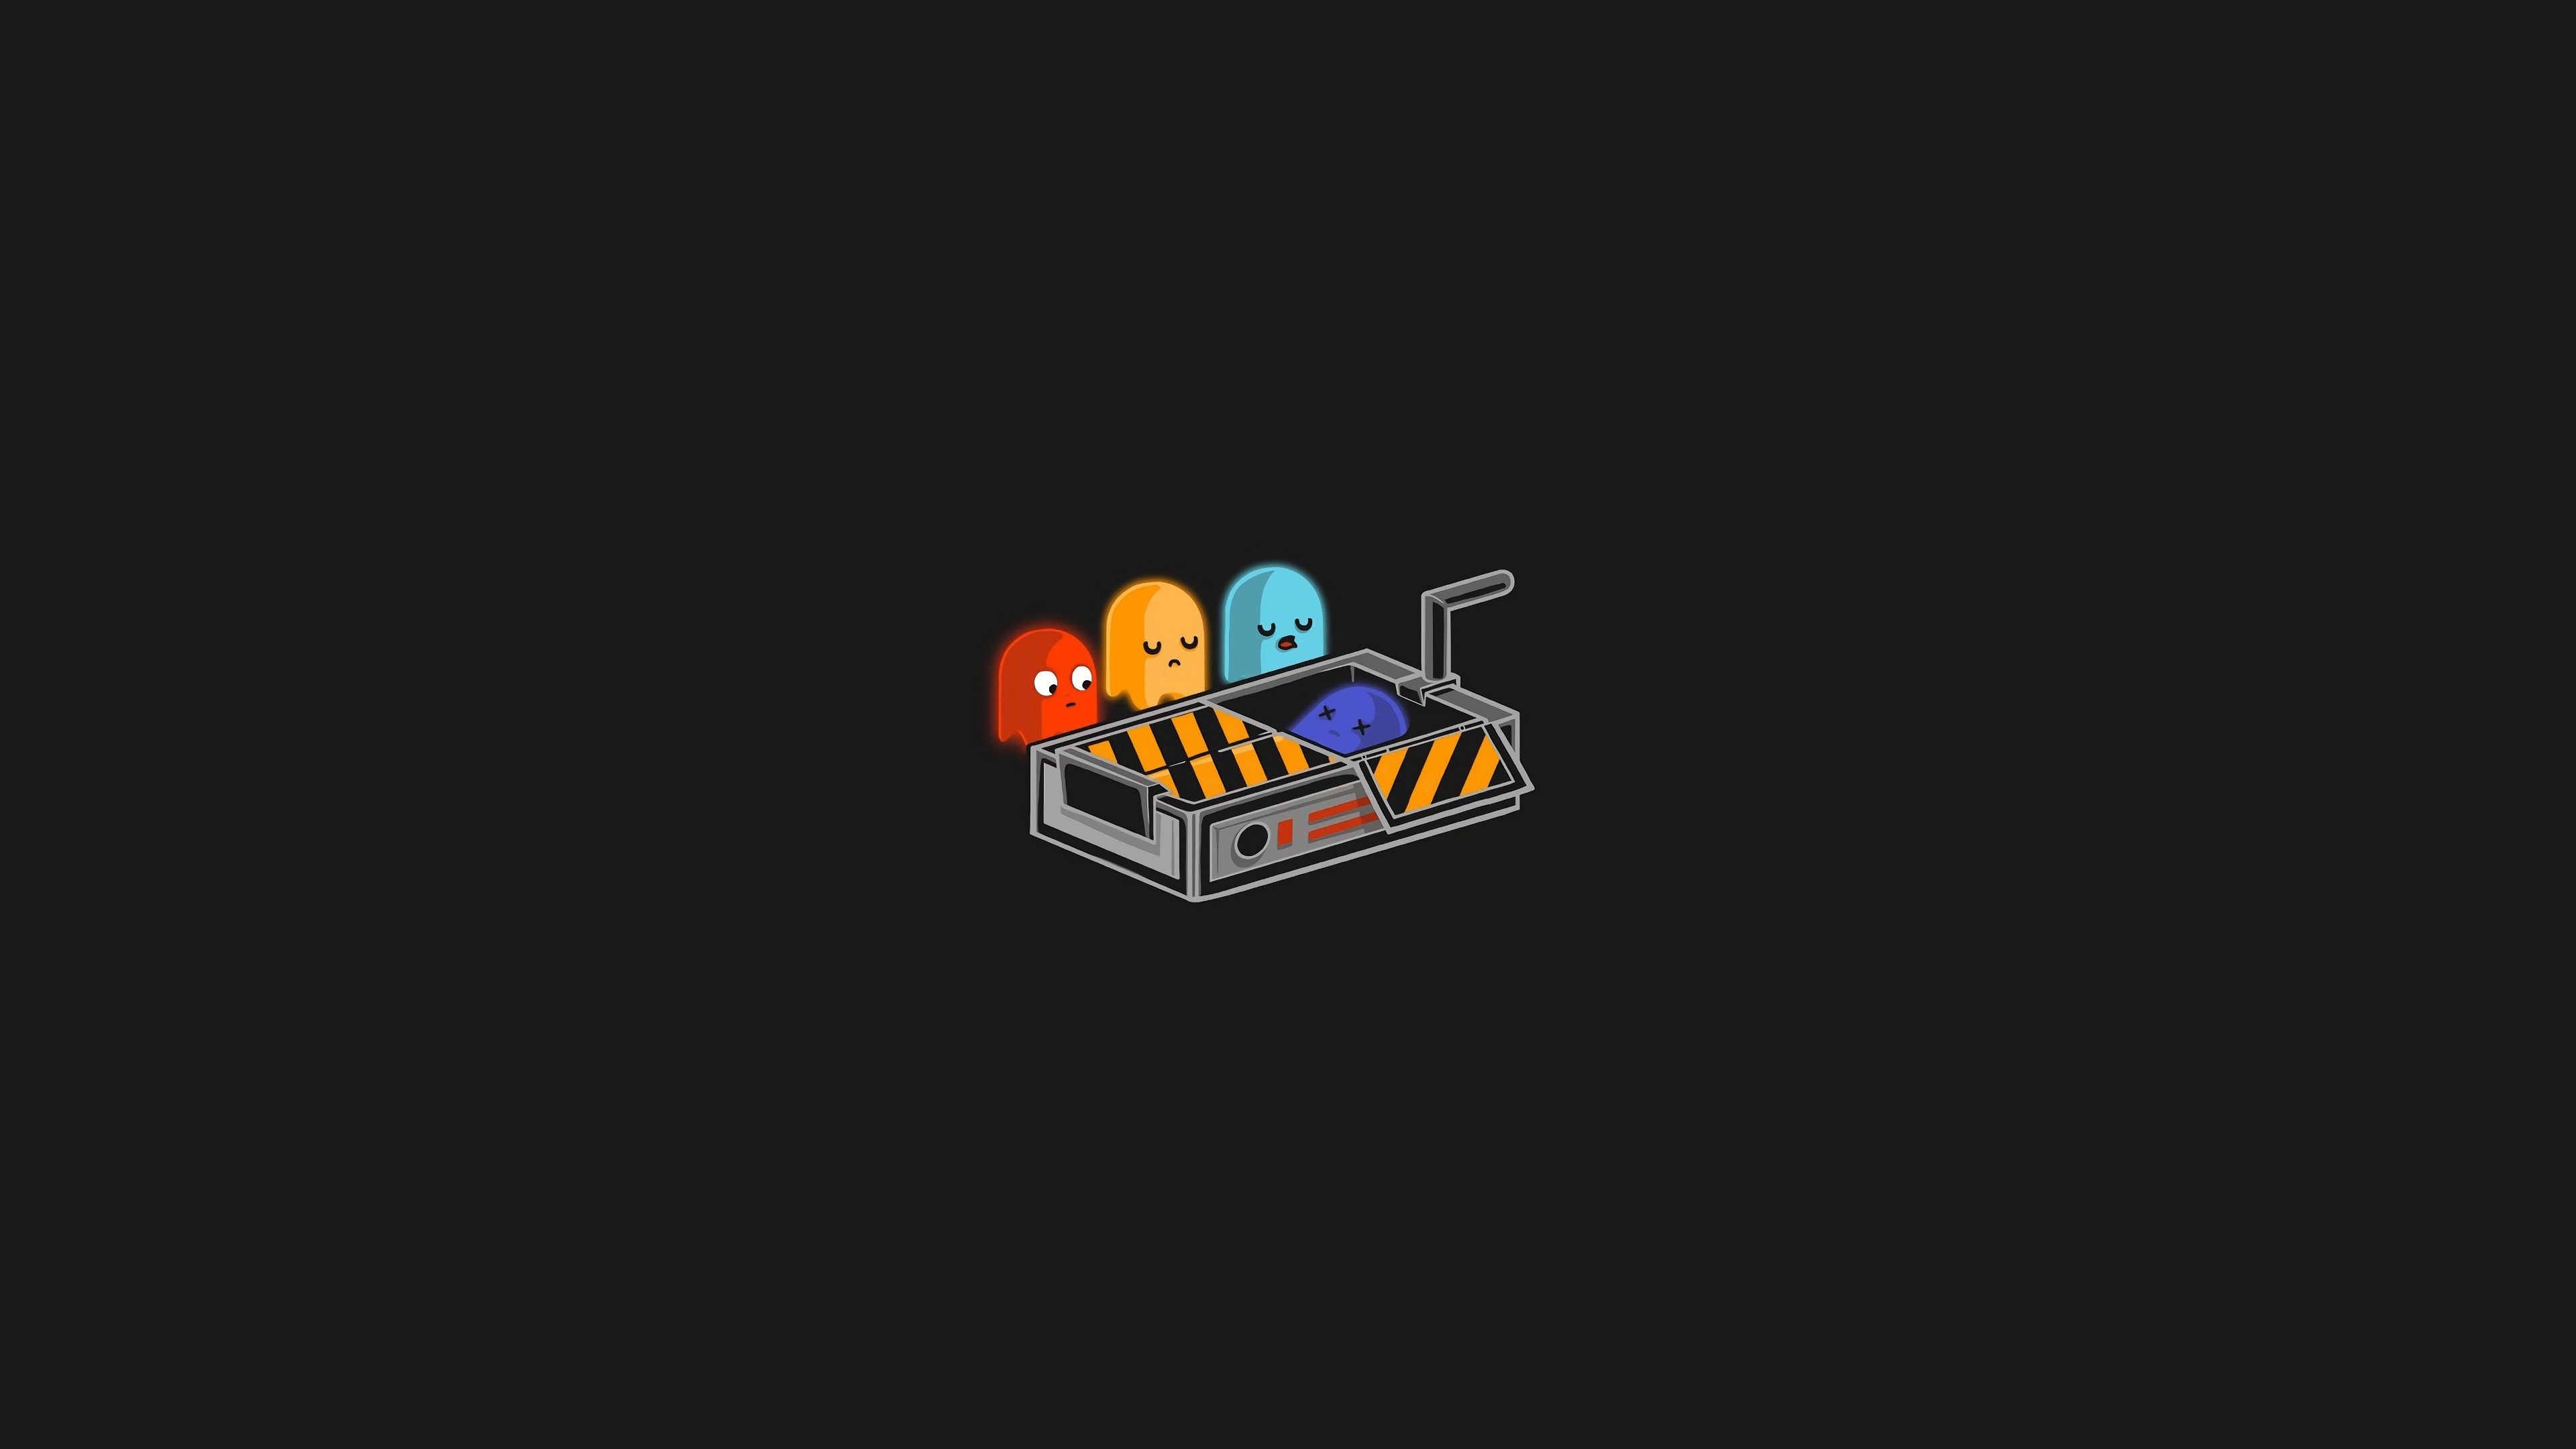 Pac-Man Doodle Desktop Wallpaper - Pac-Man Wallpaper in 4K